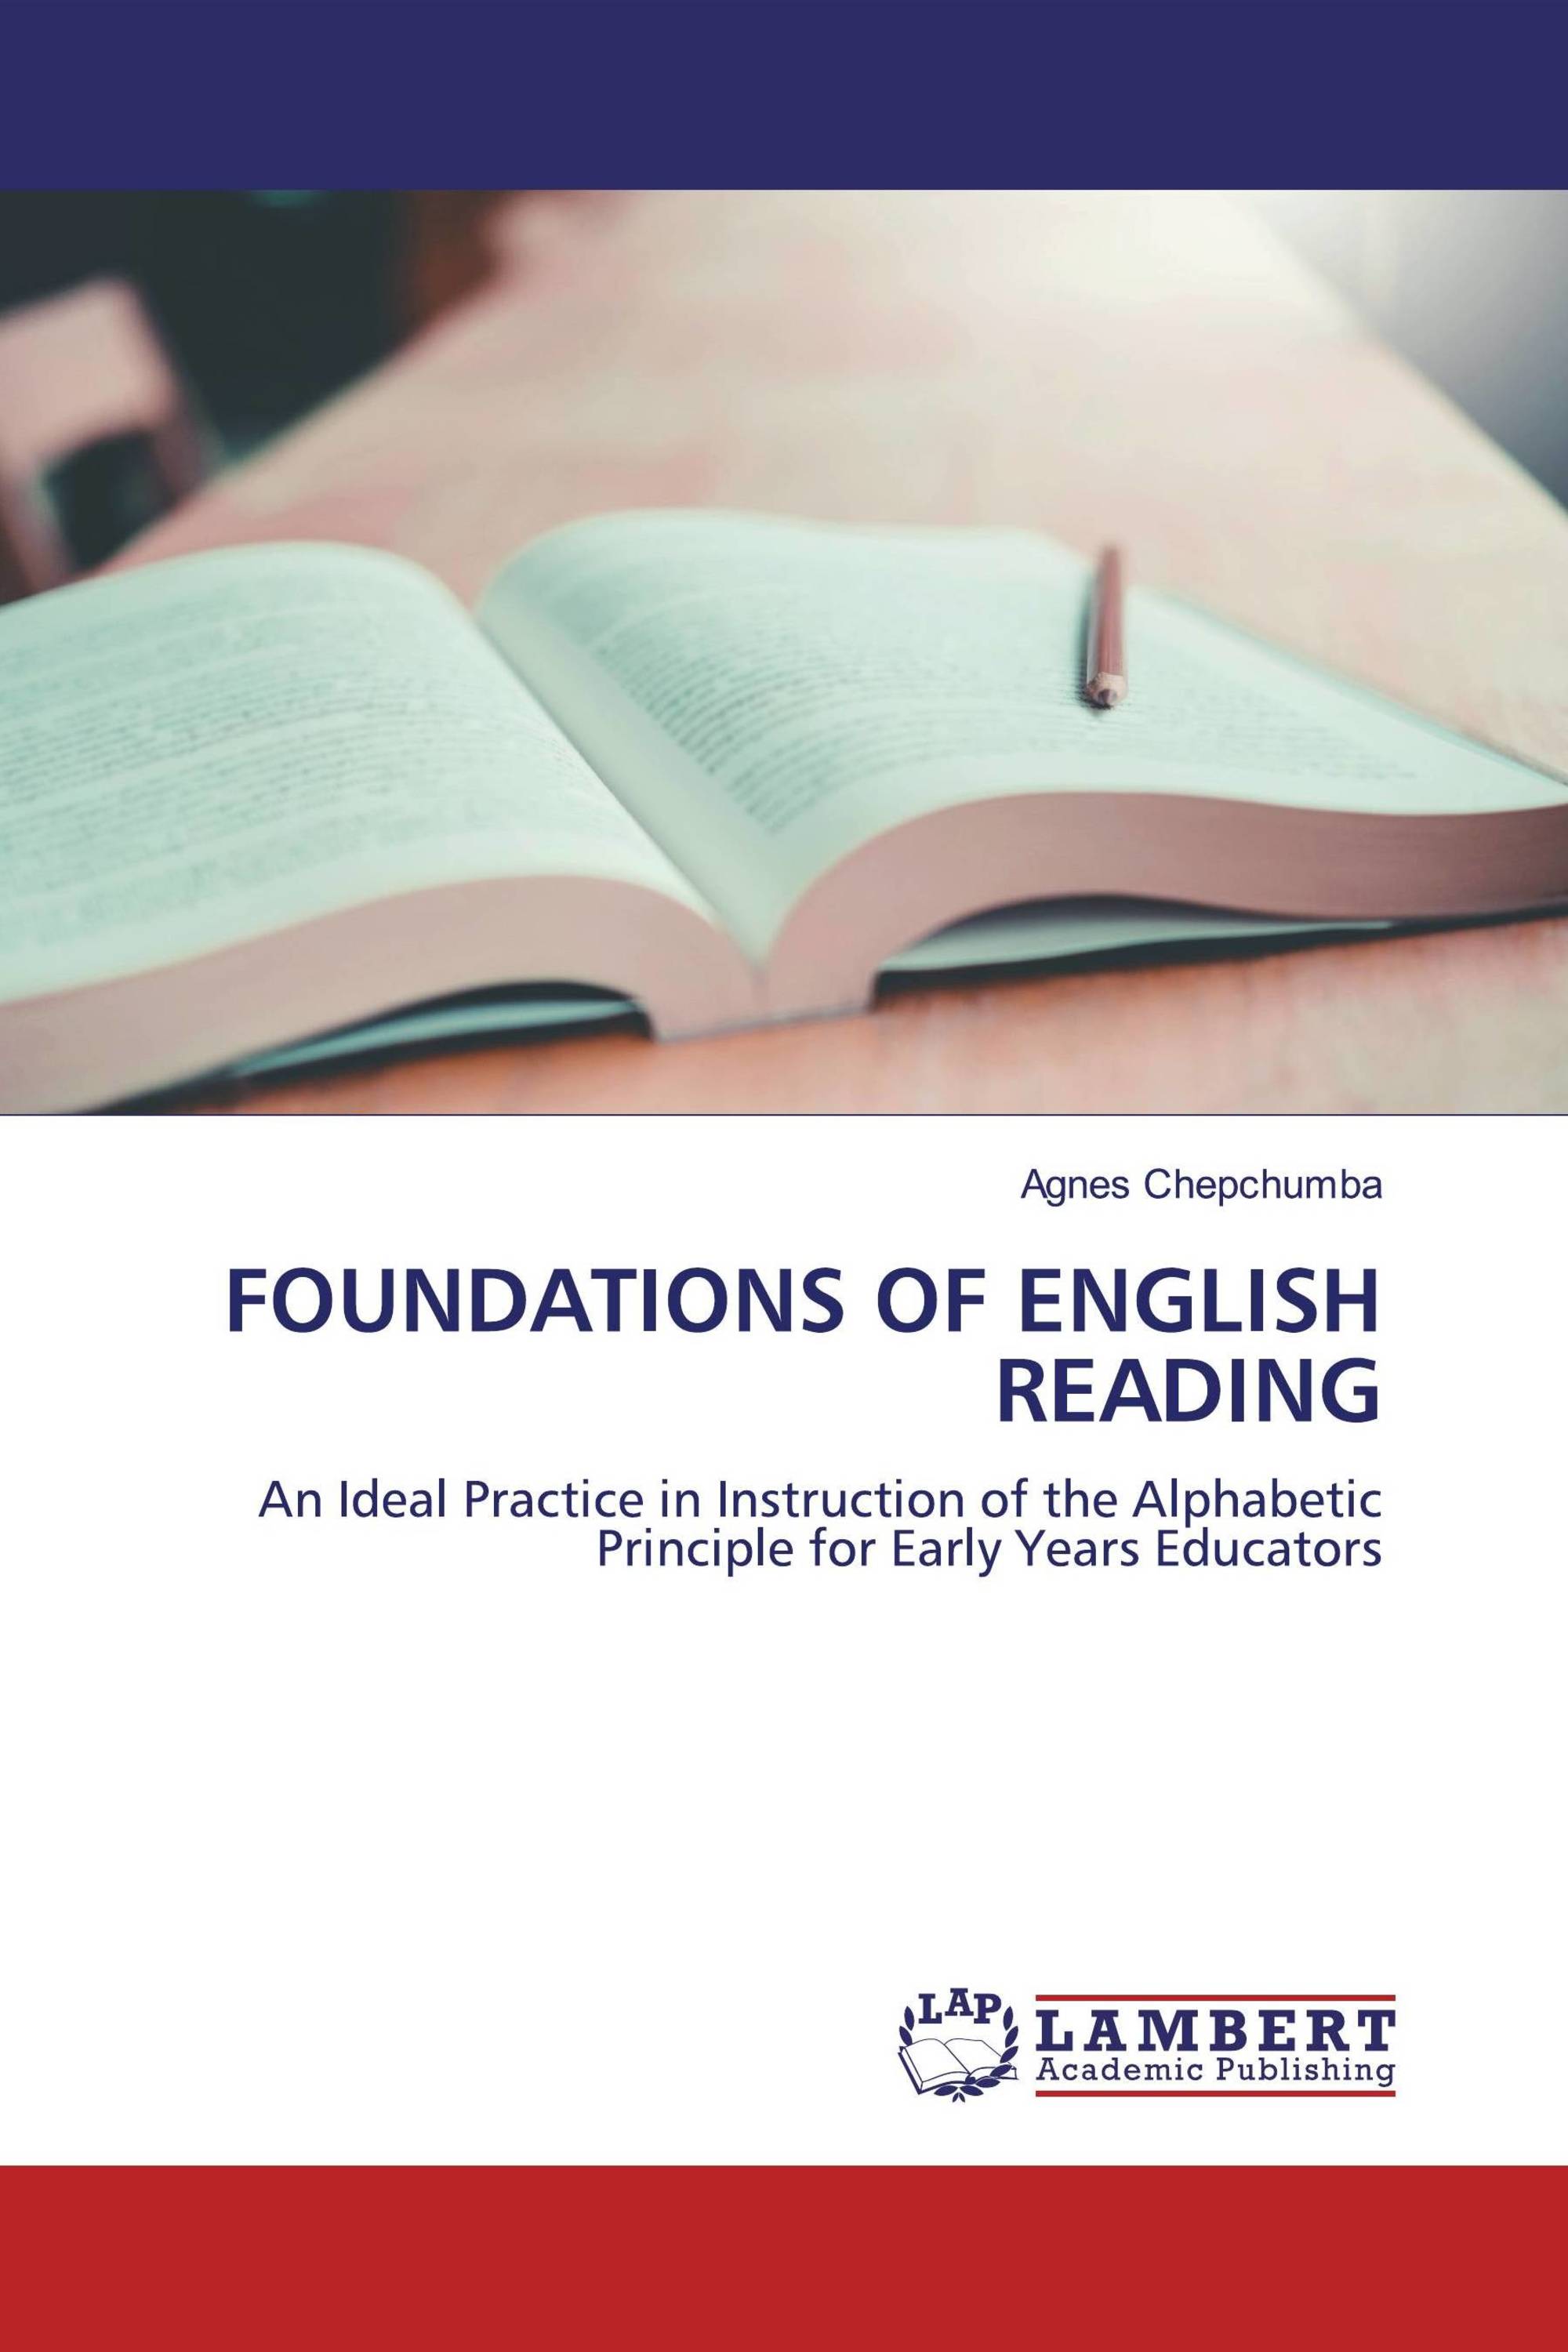 FOUNDATIONS OF ENGLISH READING